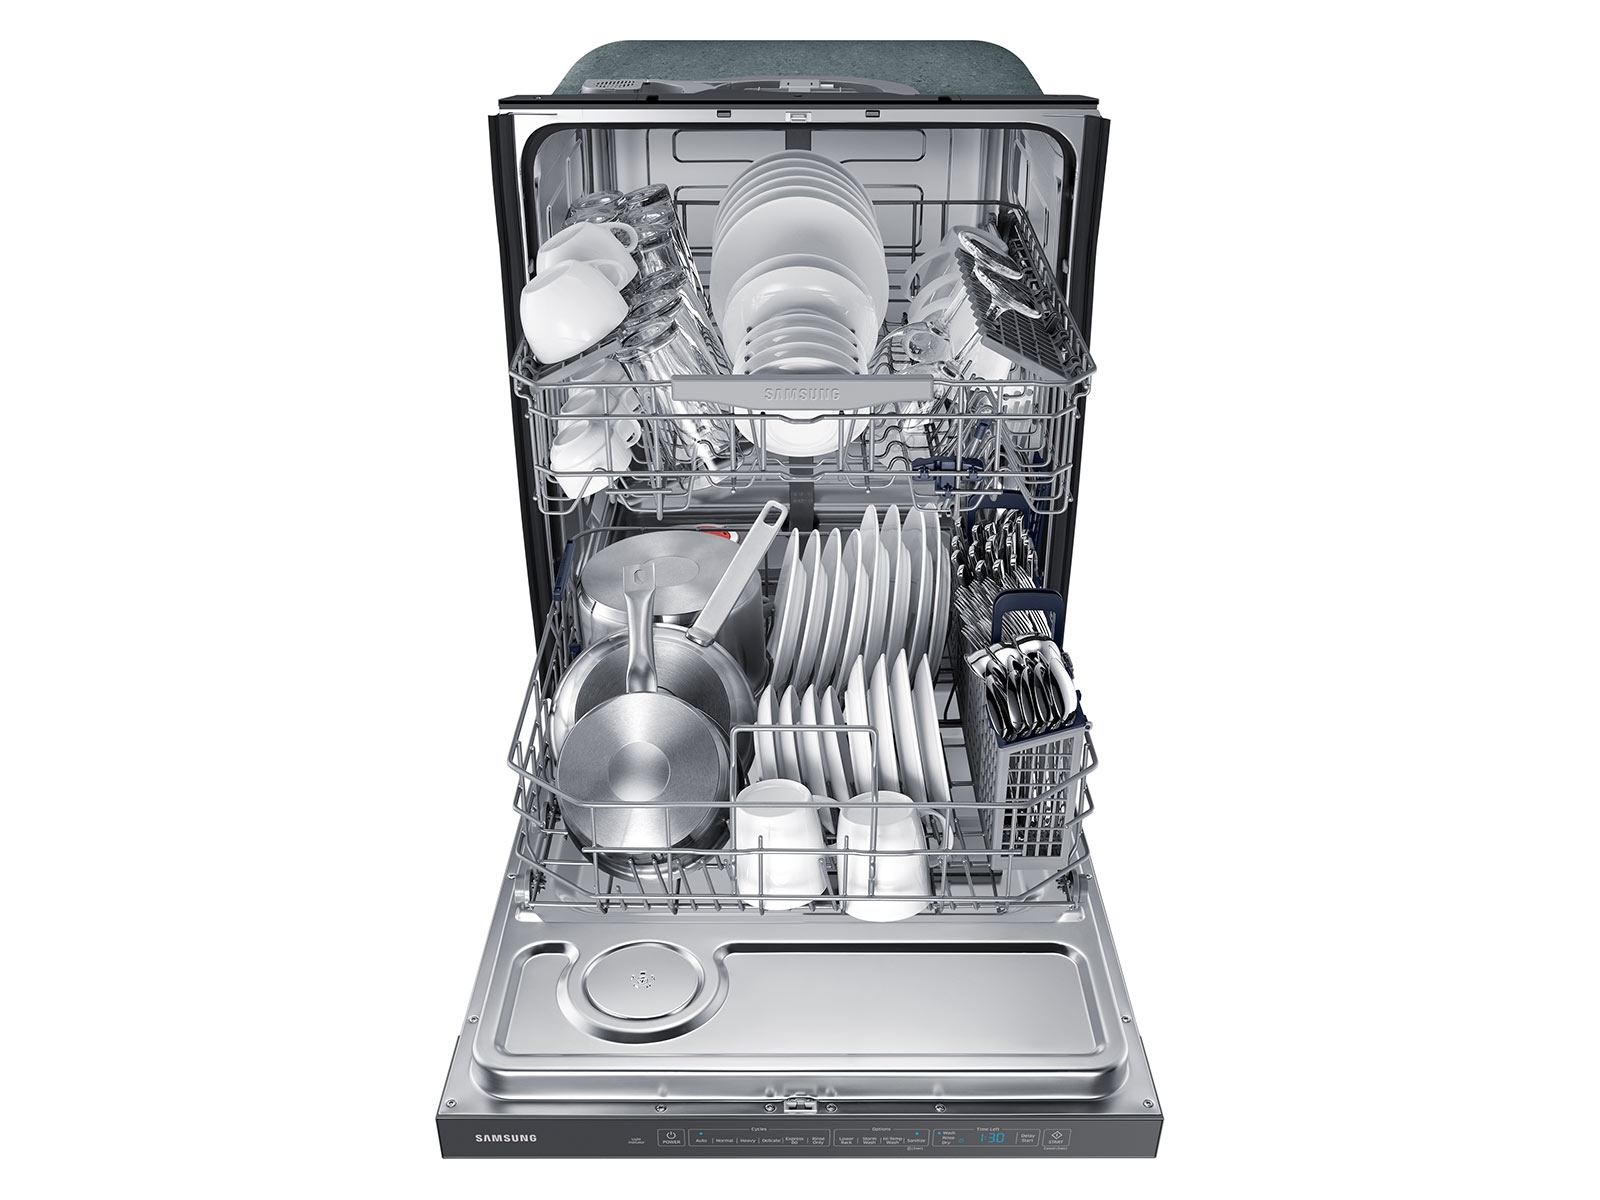 Samsung DW80M9550UG 24 Black Stainless Fully Integrated Dishwasher #117733